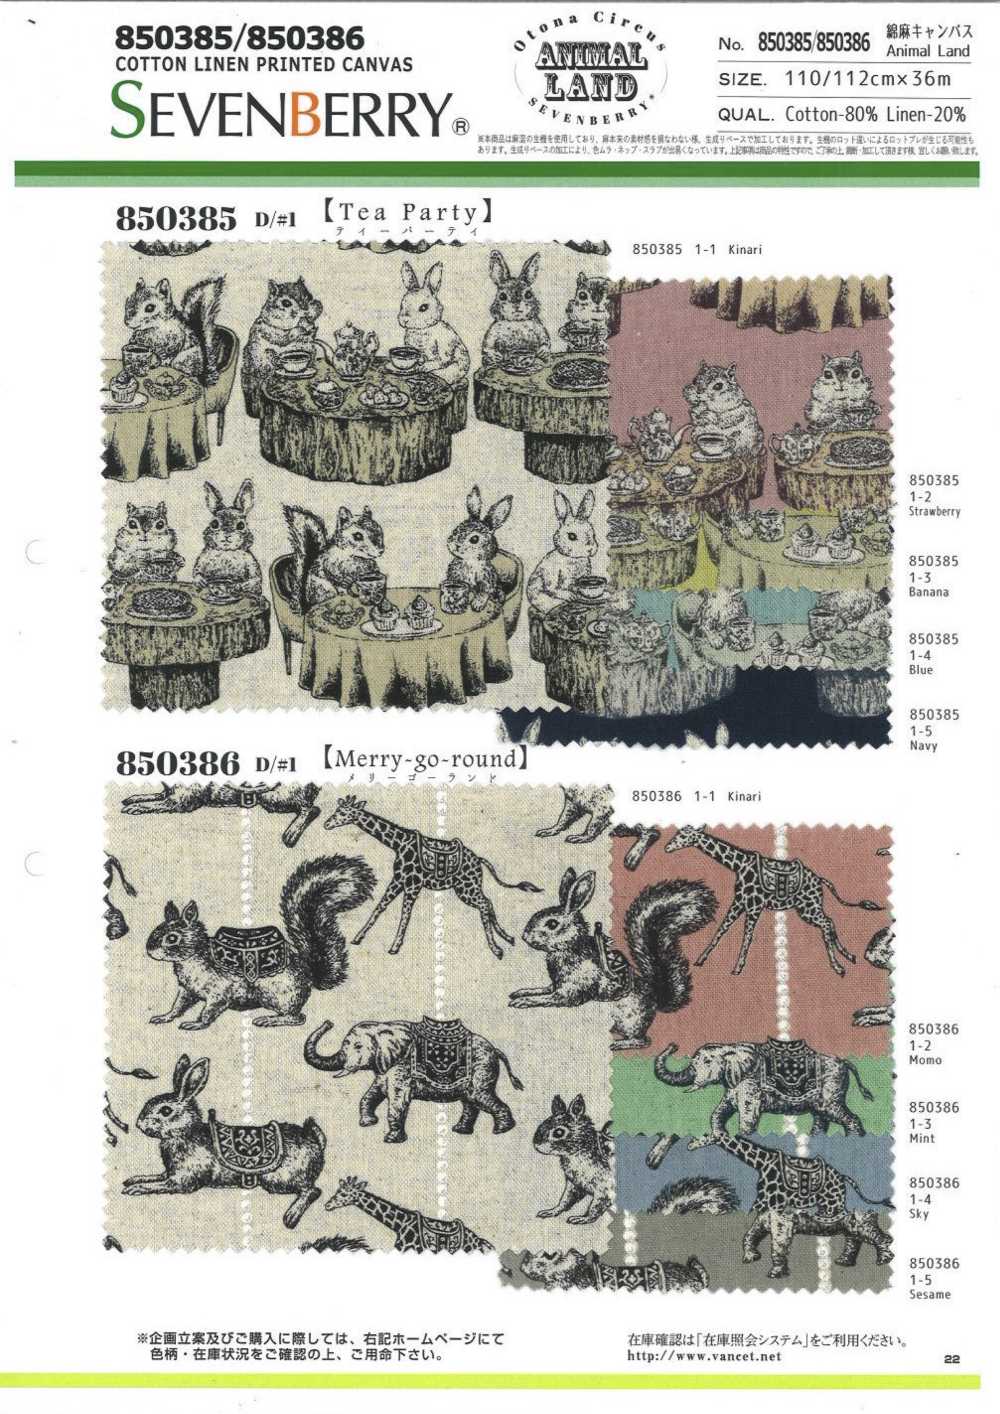 850386 Lino Lino Lona Animal Land Tiovivo[Fabrica Textil] VANCET